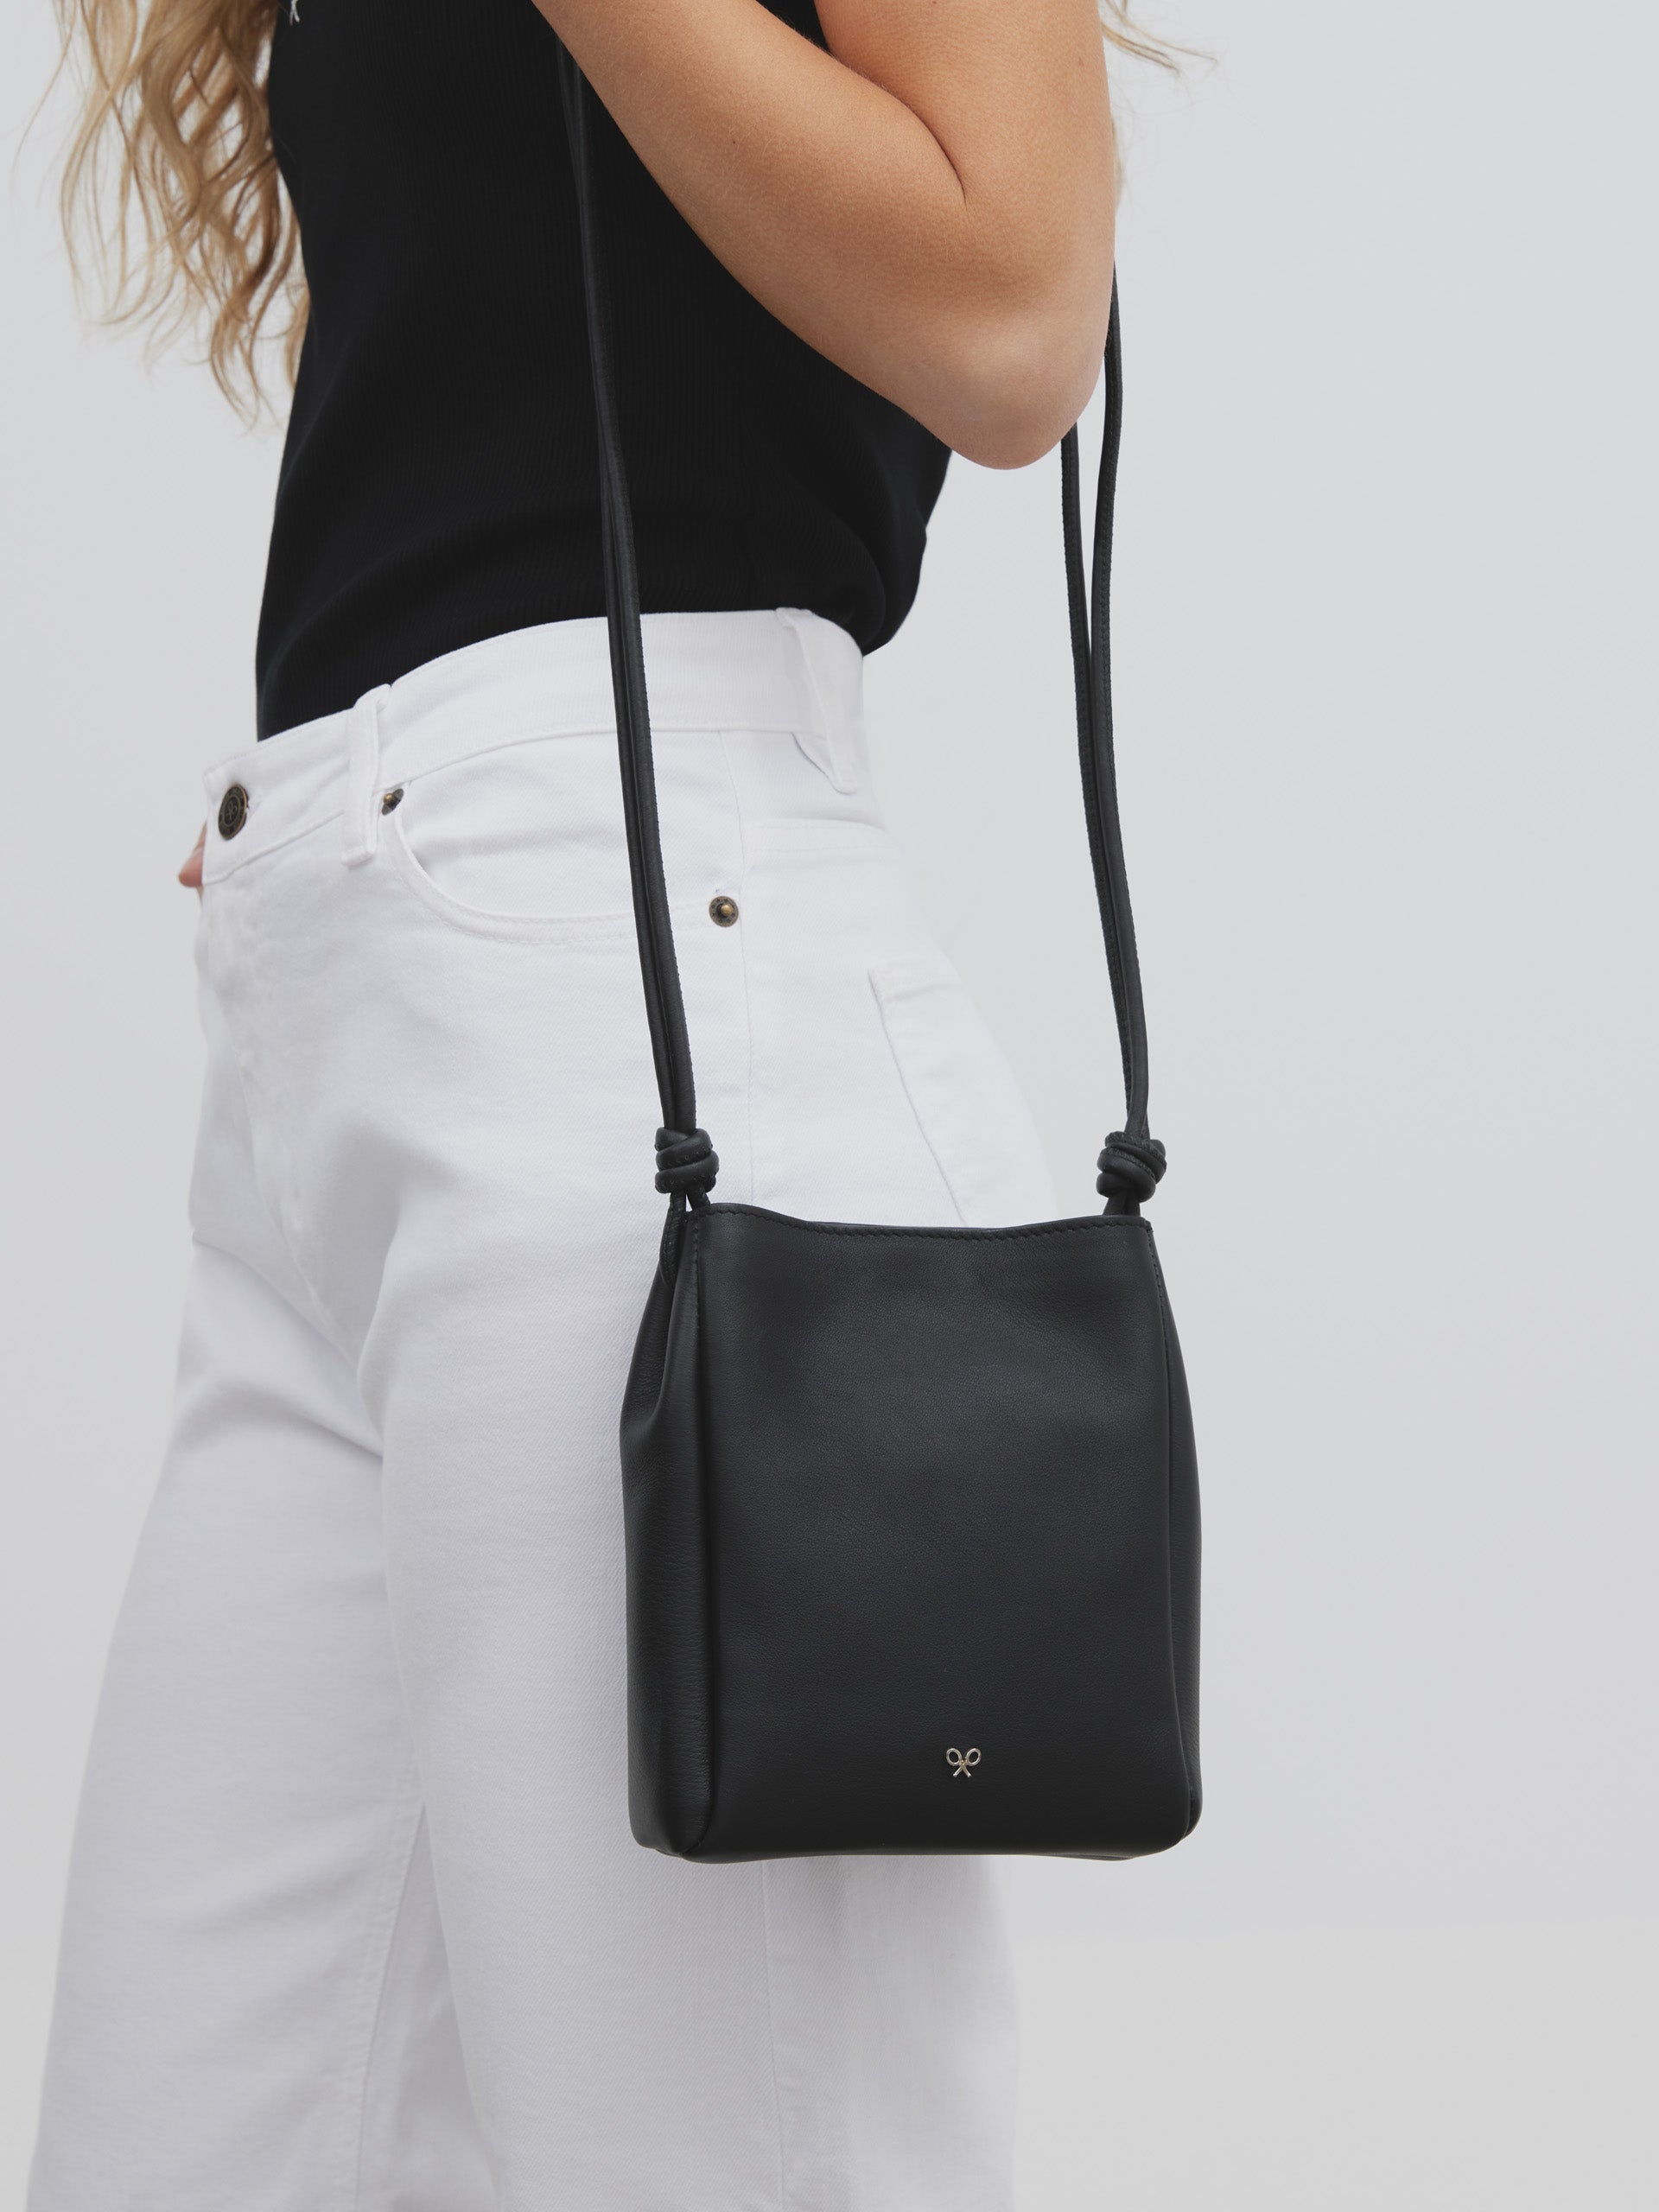 Black leather knot bag